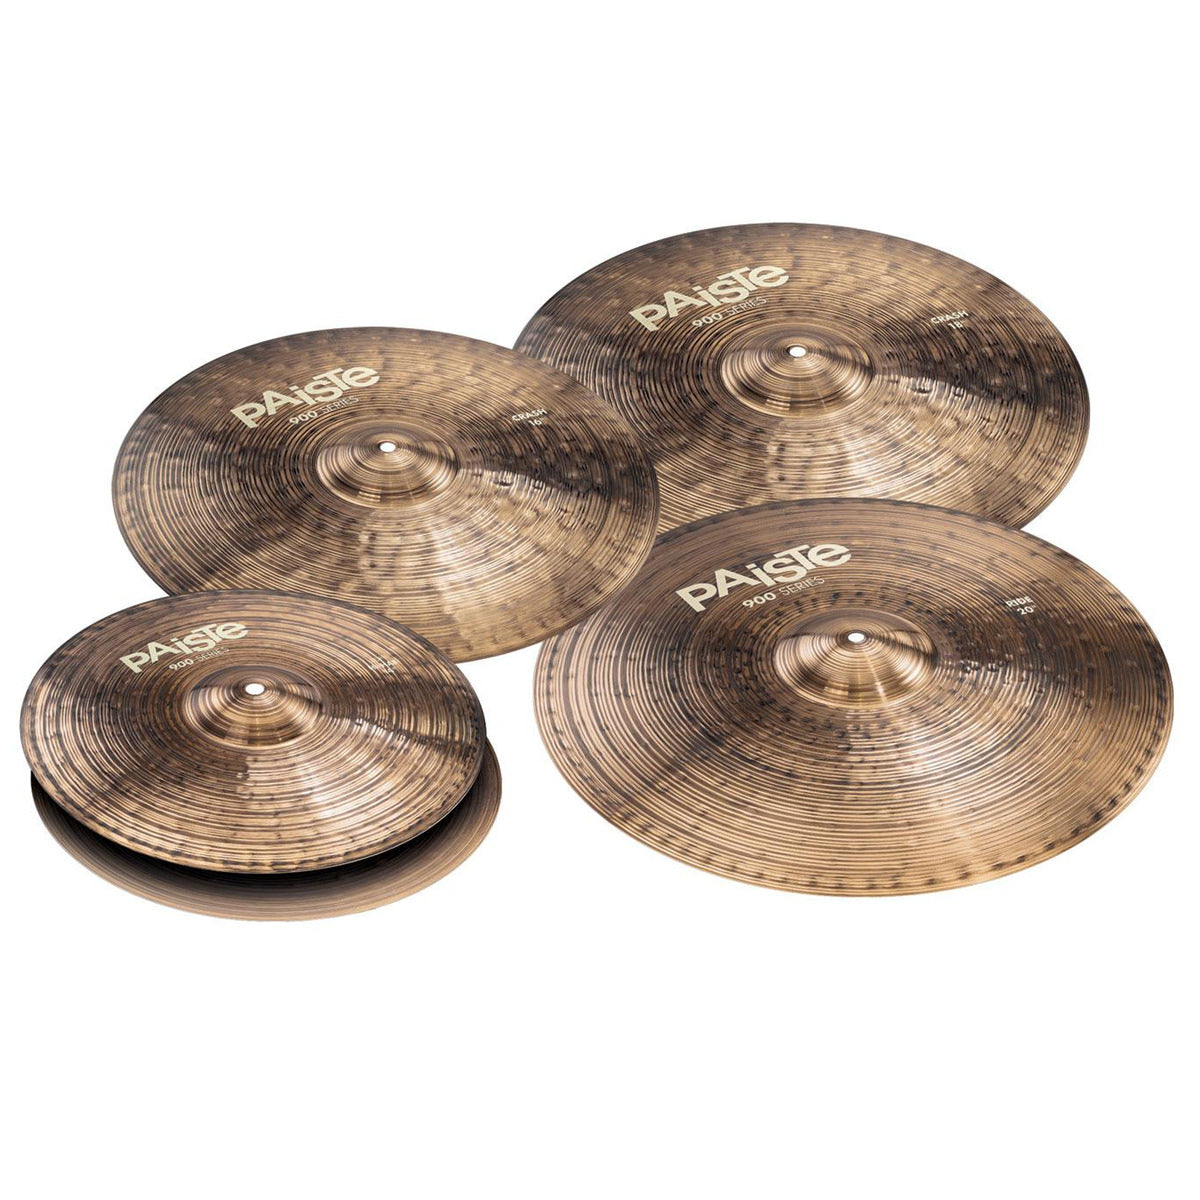 Paiste 900 Universal Cymbal Set (14" Hats, 17" & 19" Crashes, 20" Ride)